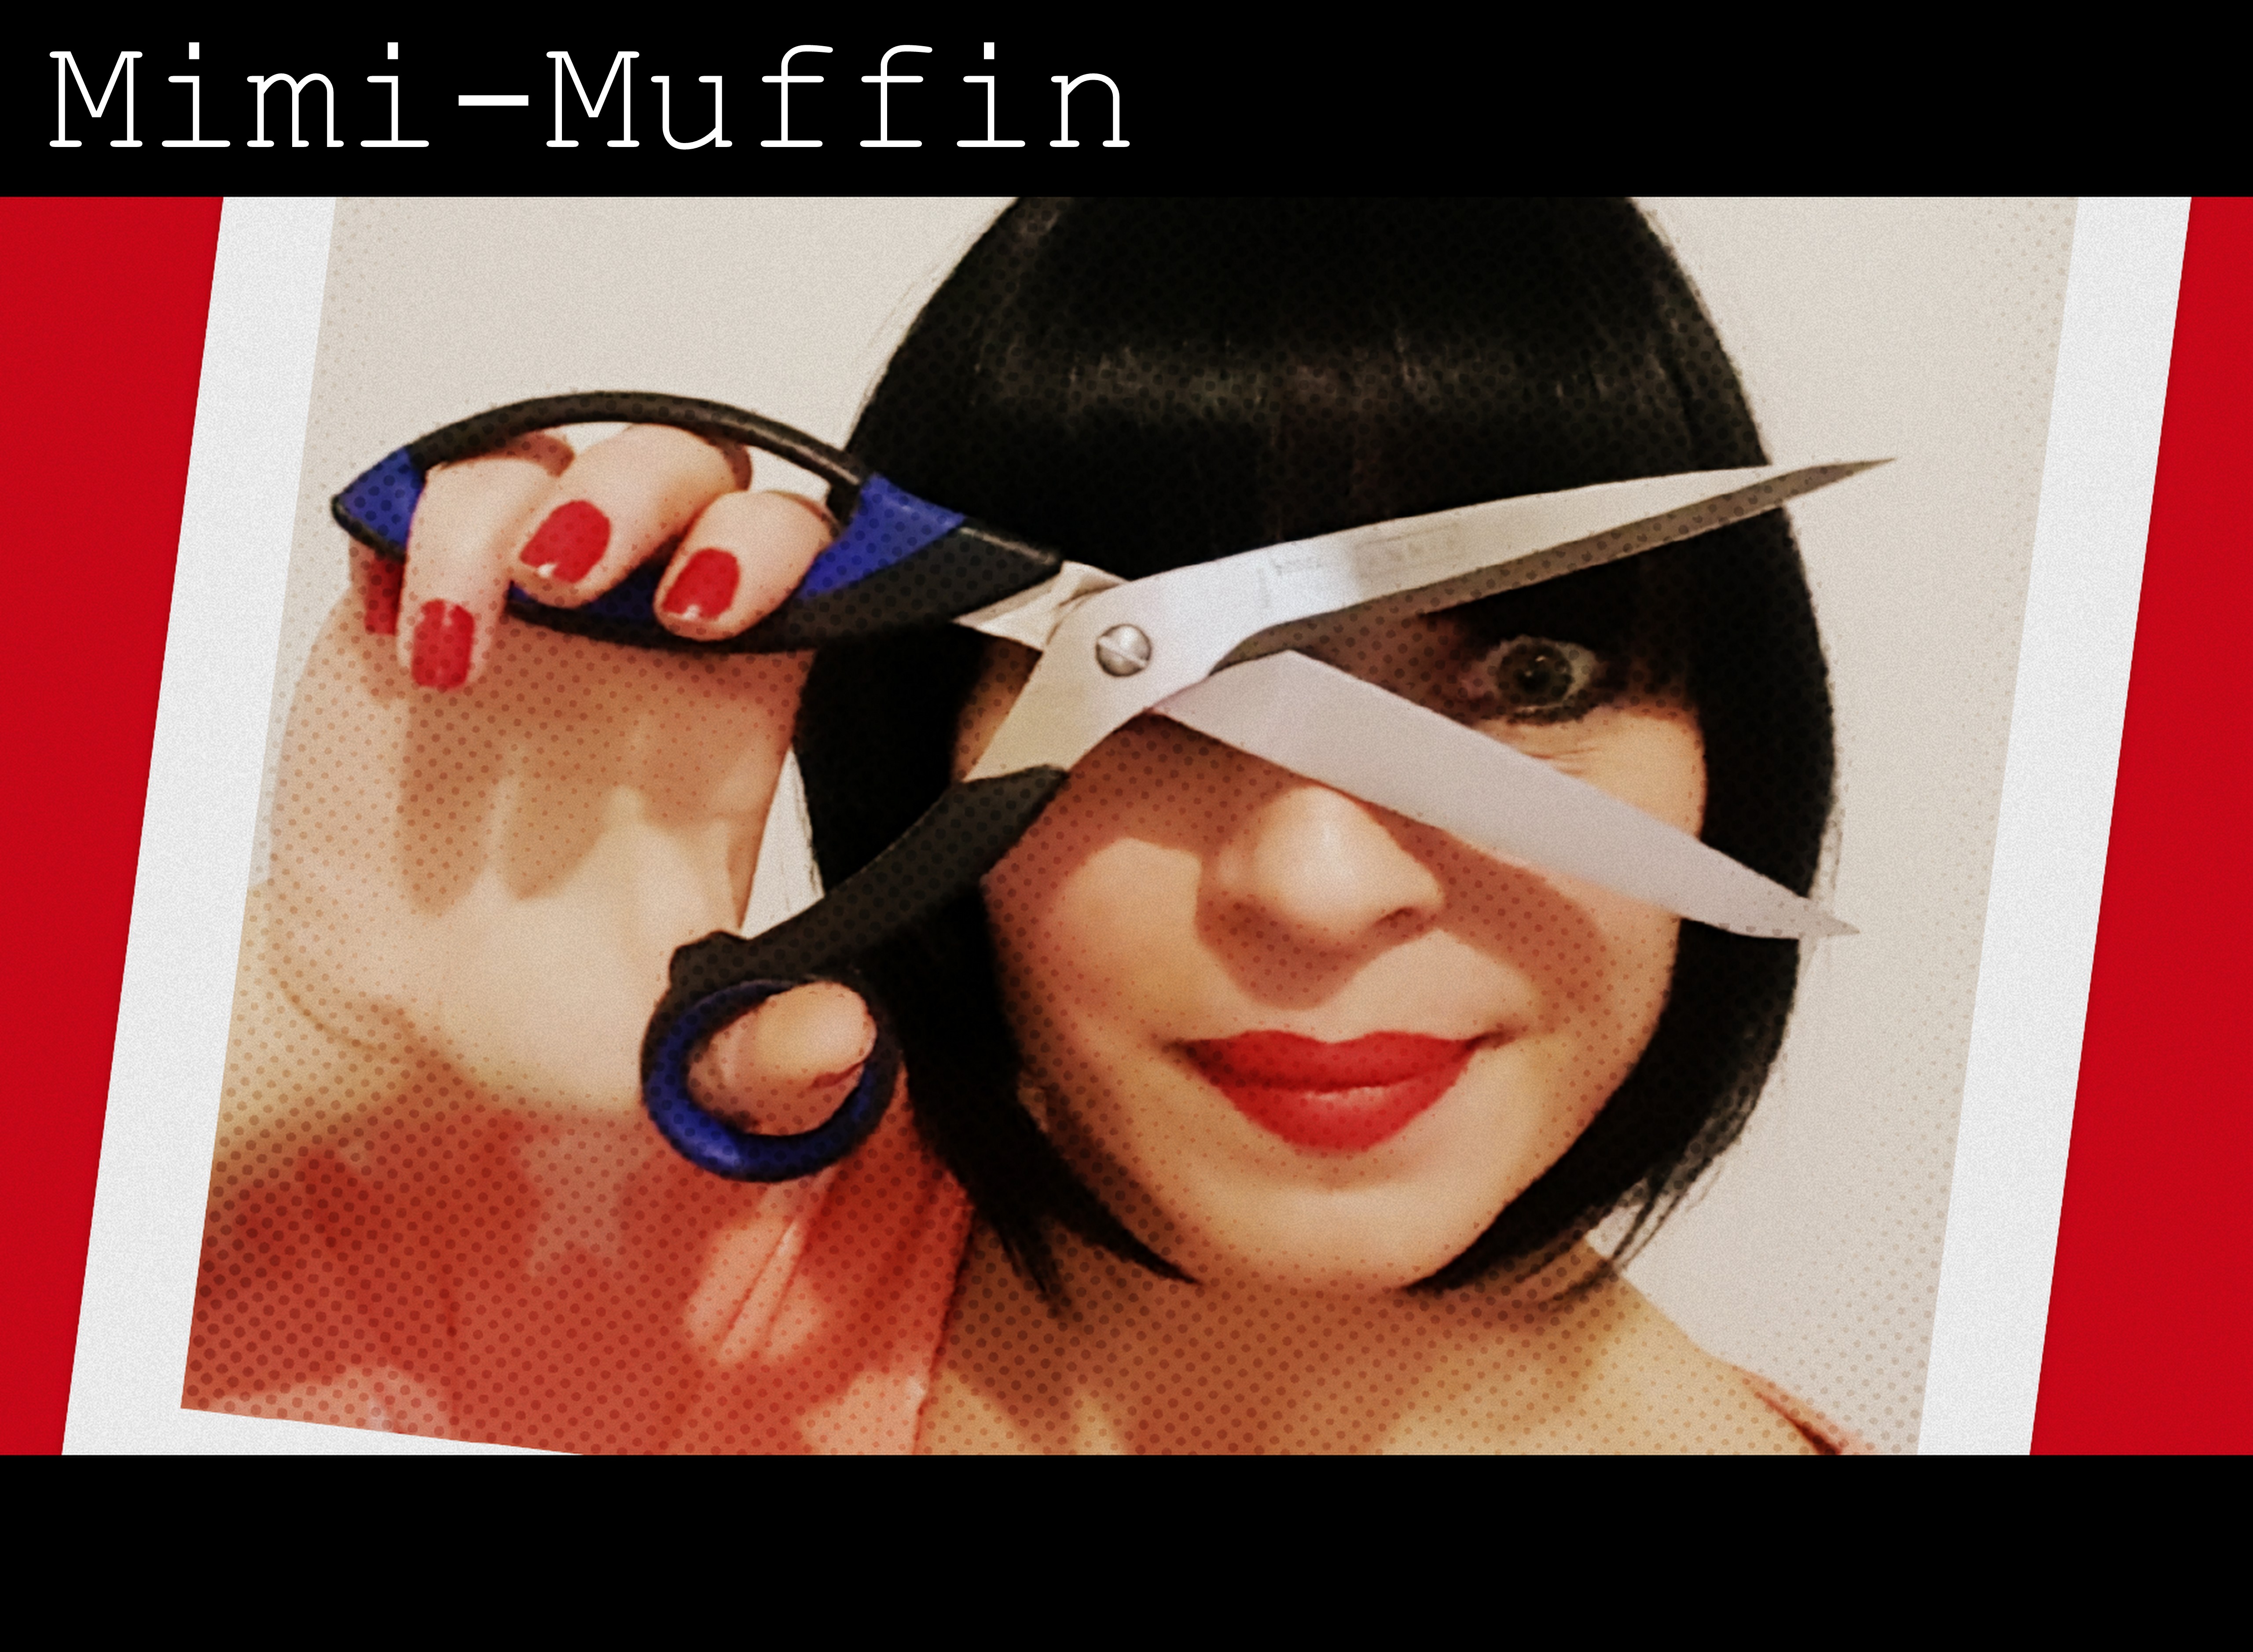 Mimi Muffin